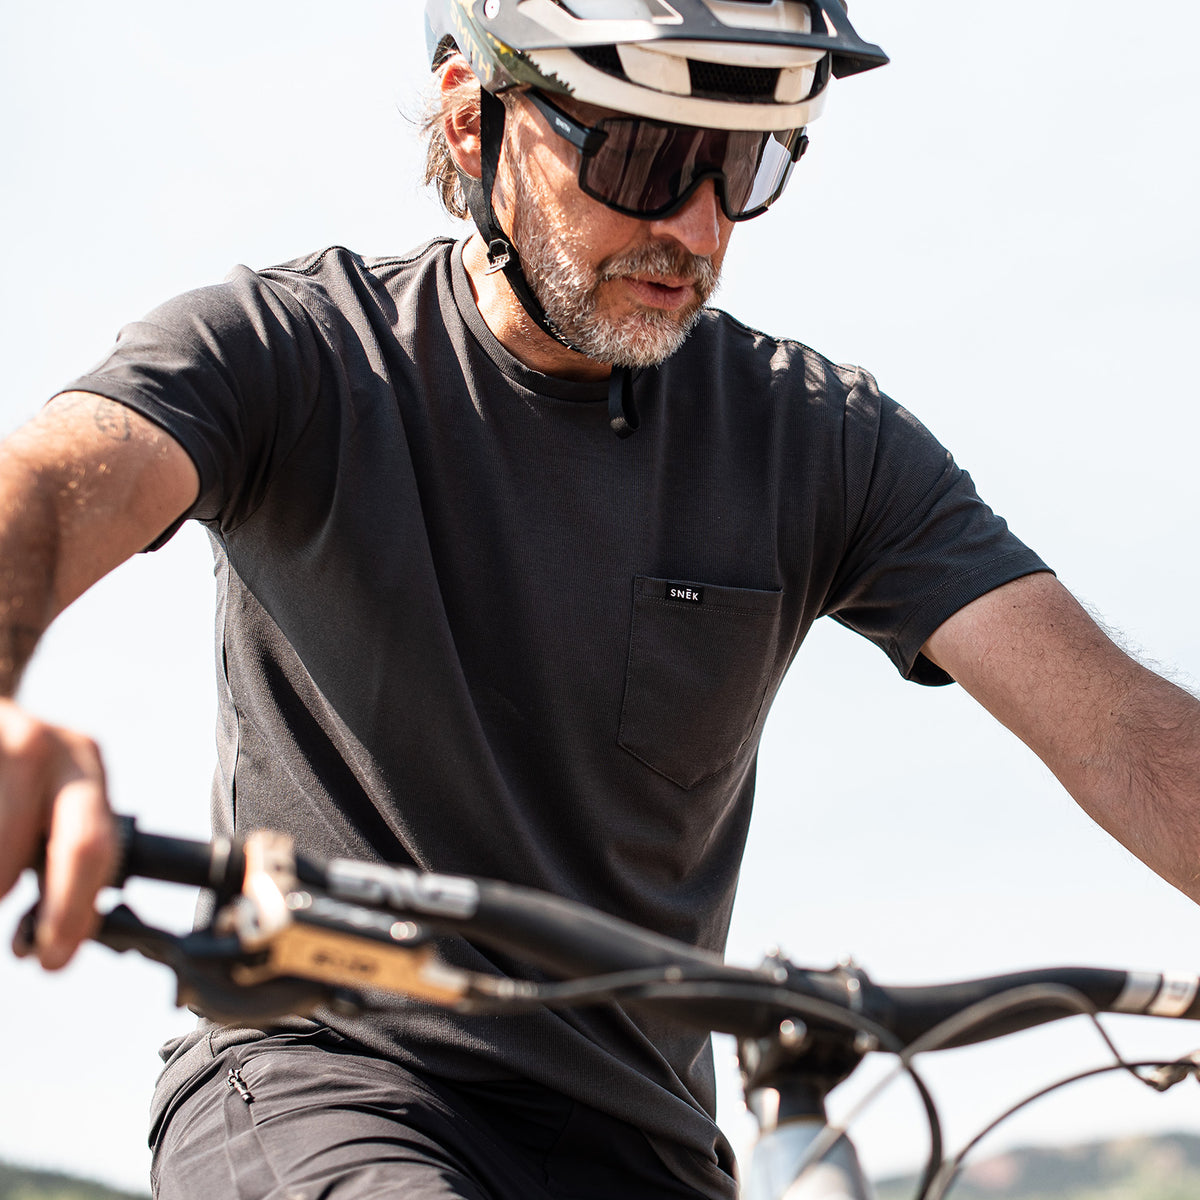 snek cycling mountain biker in the dry creek tee shirt jersey with enve handlebar and yeti bike